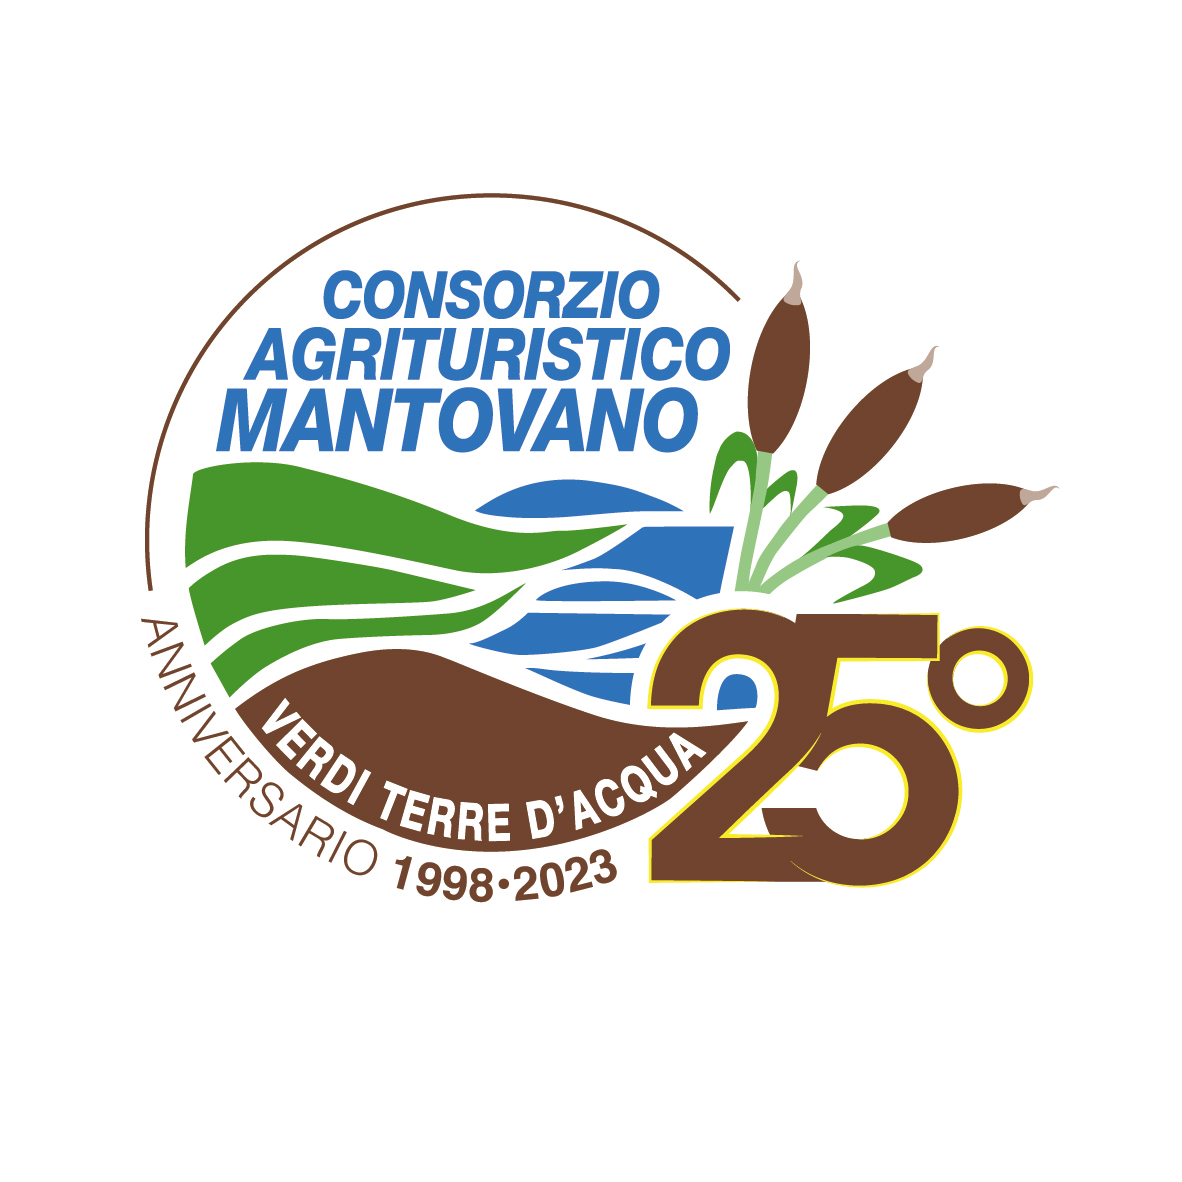 Consorzio Agrituristico Mantovano "Verdi terre d’acqua"